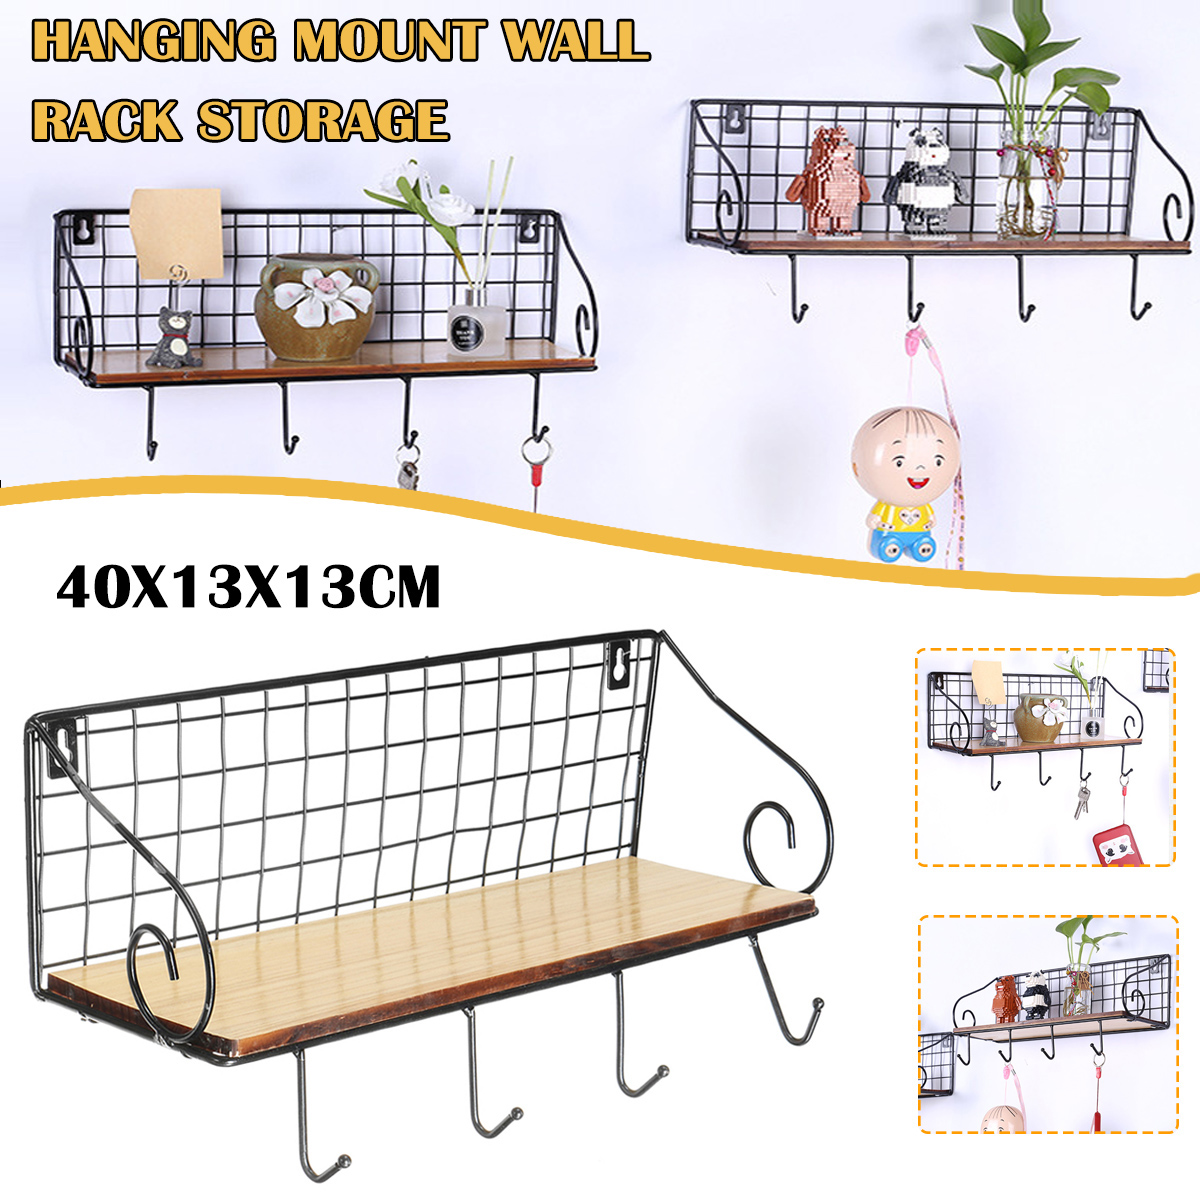 Hanging-Wall-Mounted-Rack-Storage-Organizer-Wood-Home-Display-Storage-Baskets-w-Iron-Hook-1517311-8